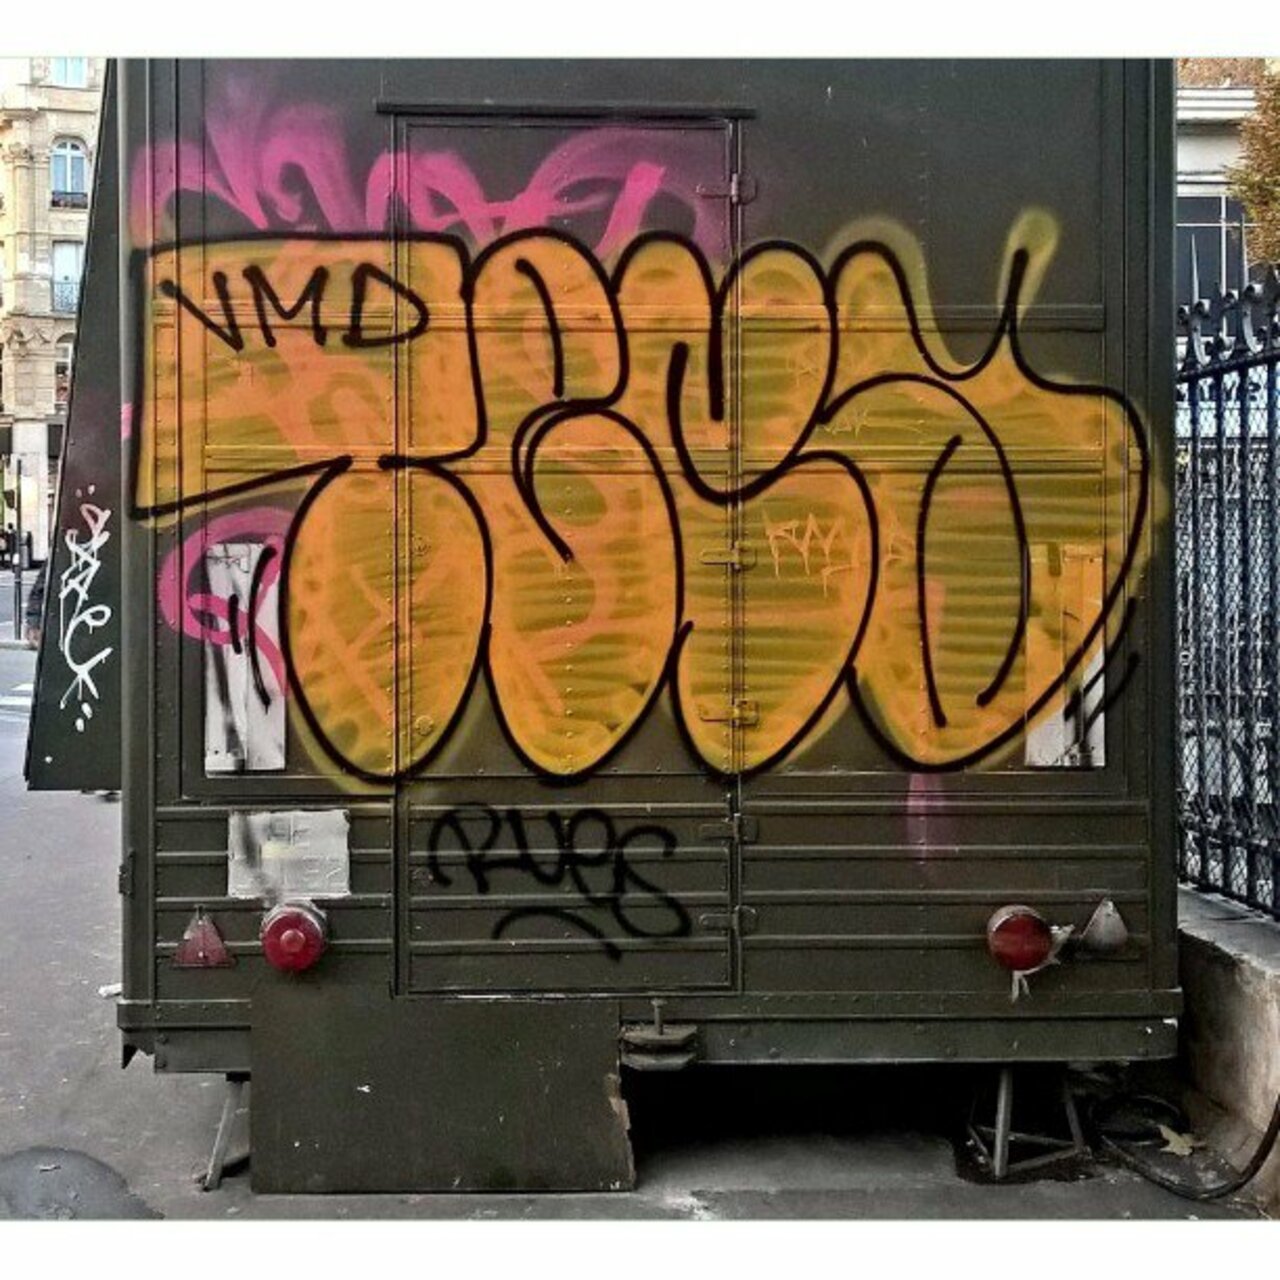 #Paris #graffiti photo by @maxdimontemarciano http://ift.tt/1XjL901 #StreetArt https://t.co/NO4TyyEWvQ